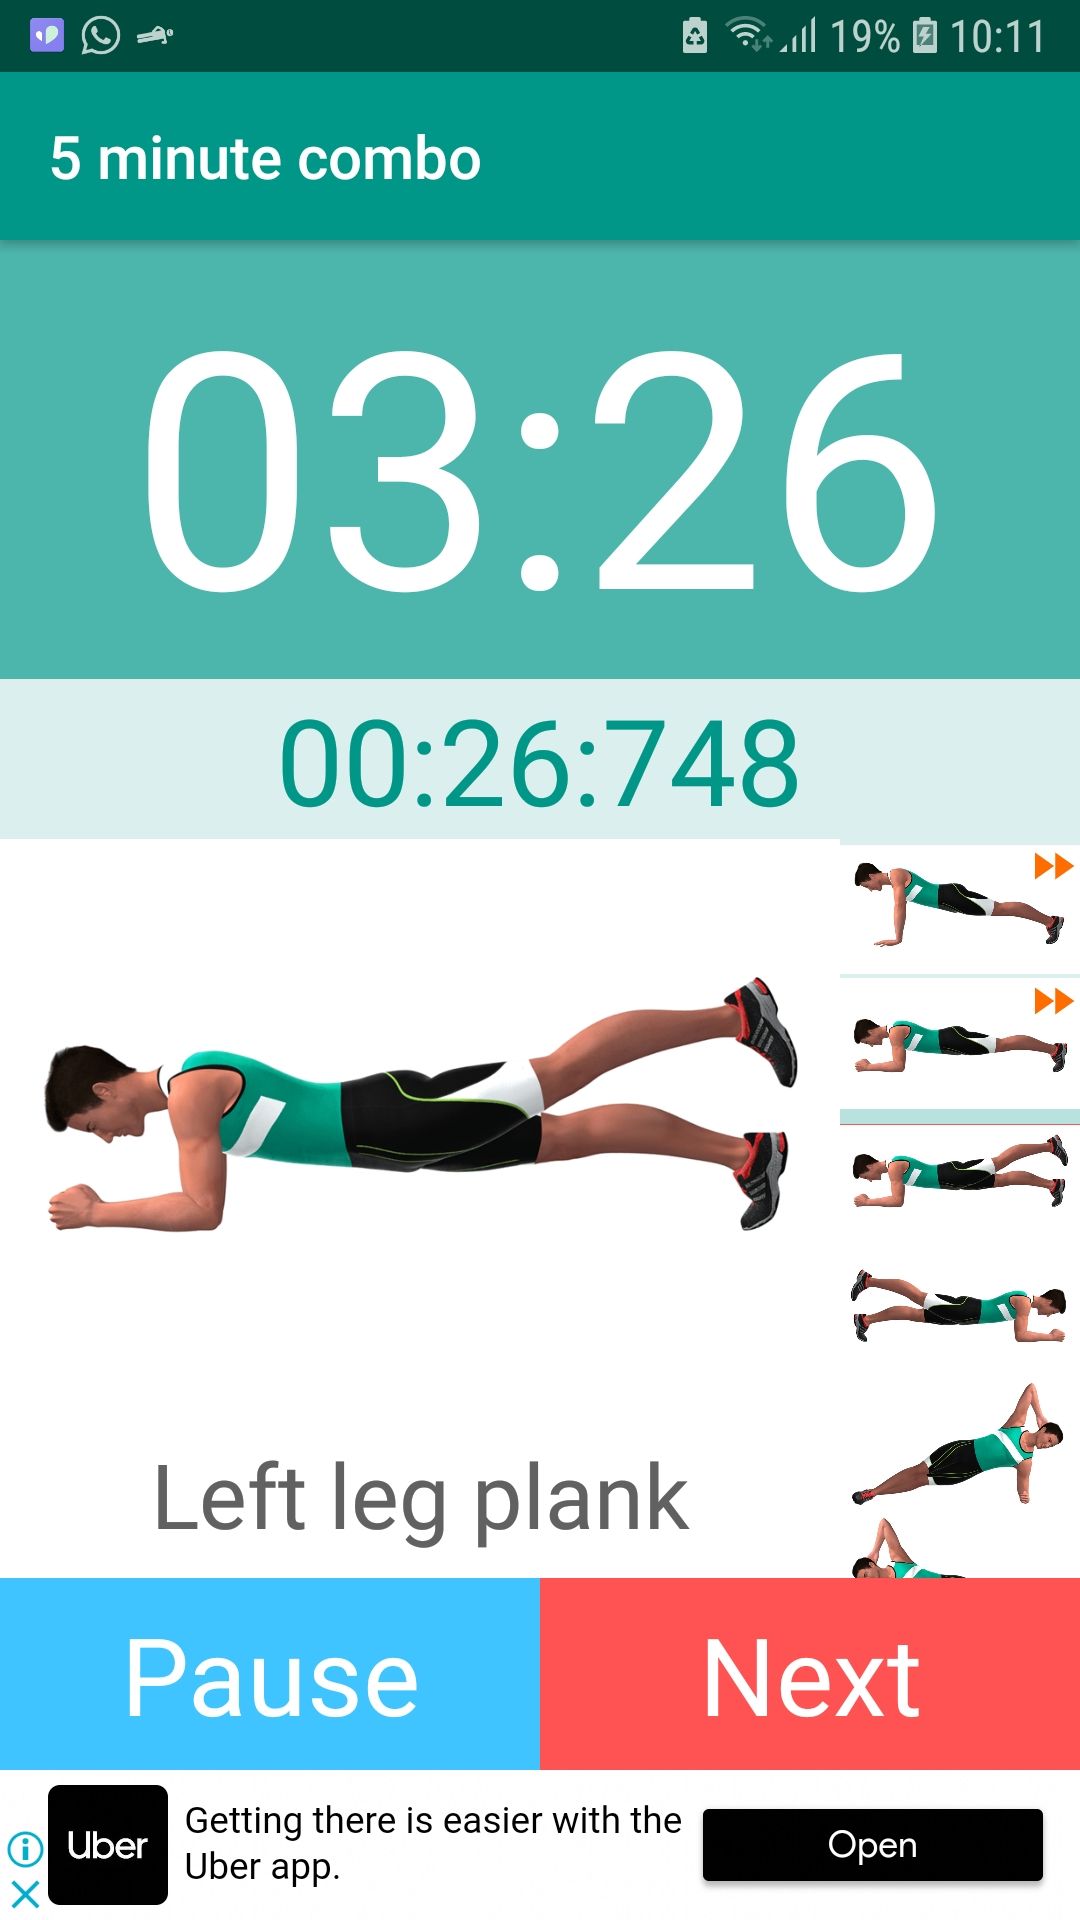 Plank Timer mobile workout app